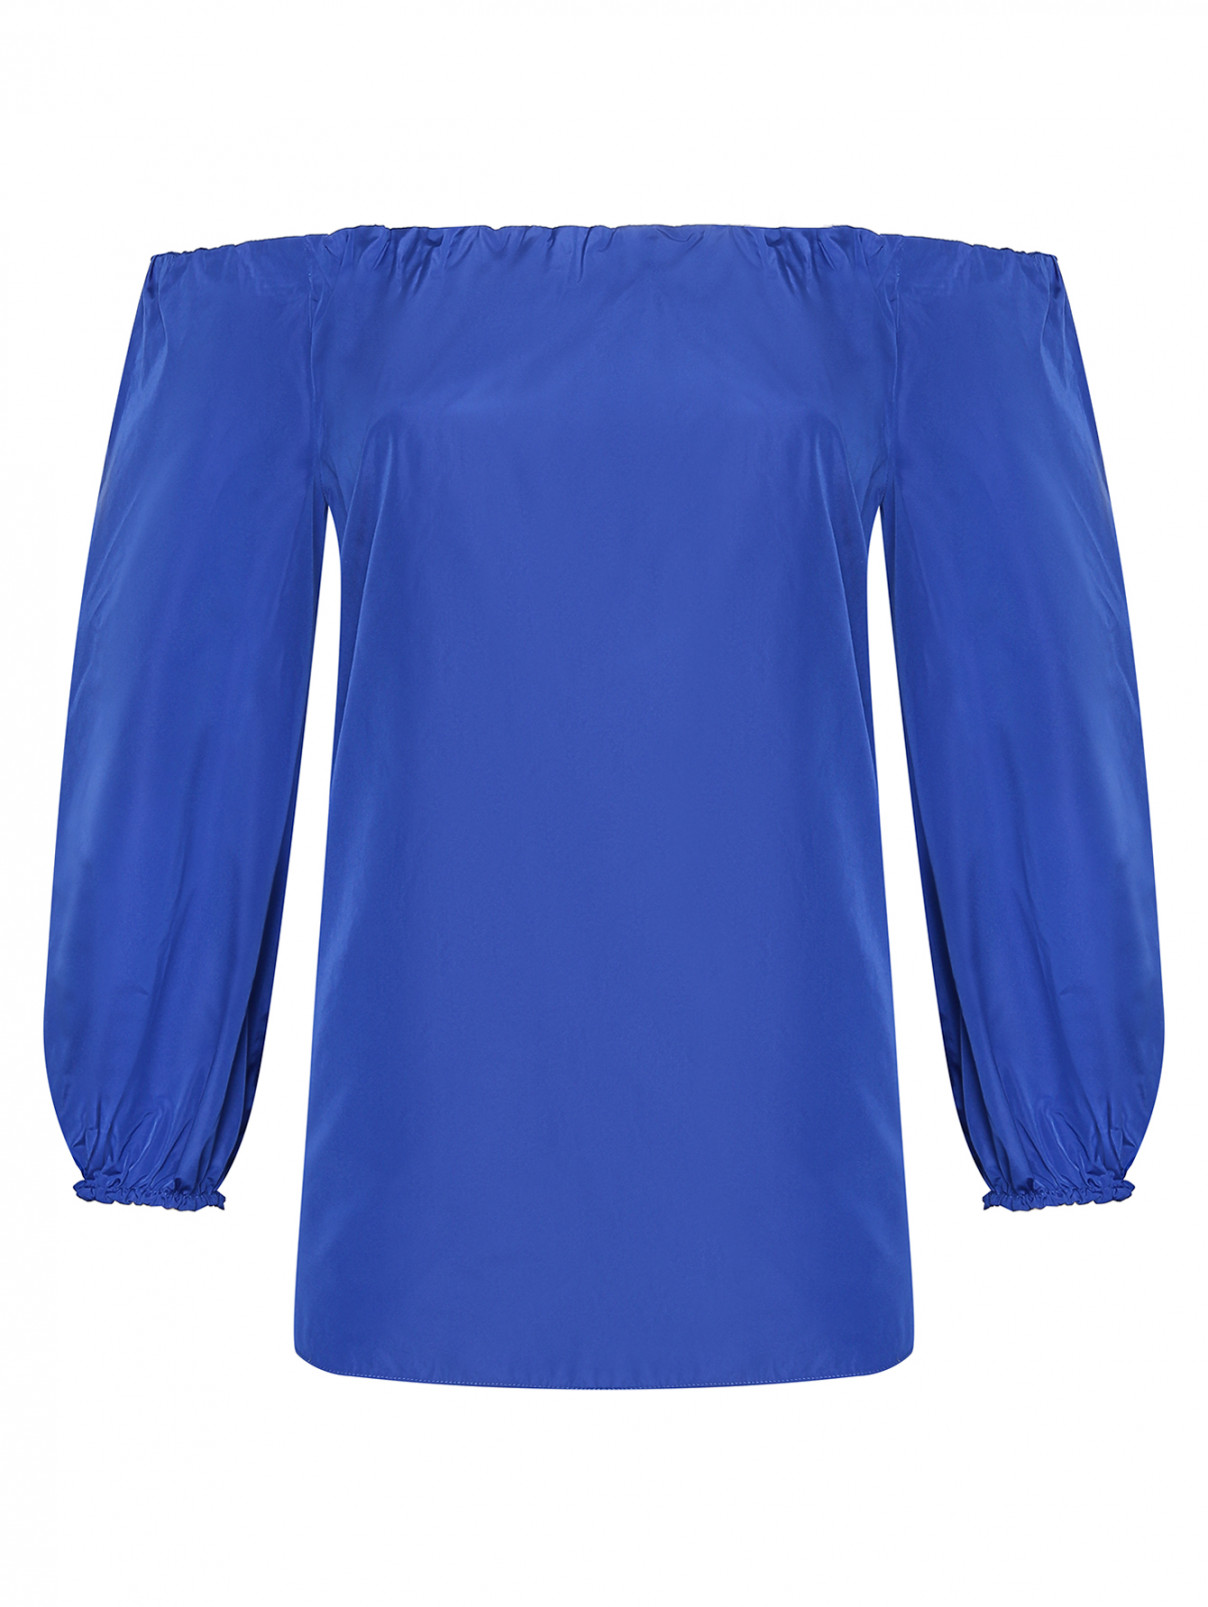 Блуза свободного кроя с рукавами-буффами Max Mara  –  Общий вид  – Цвет:  Синий